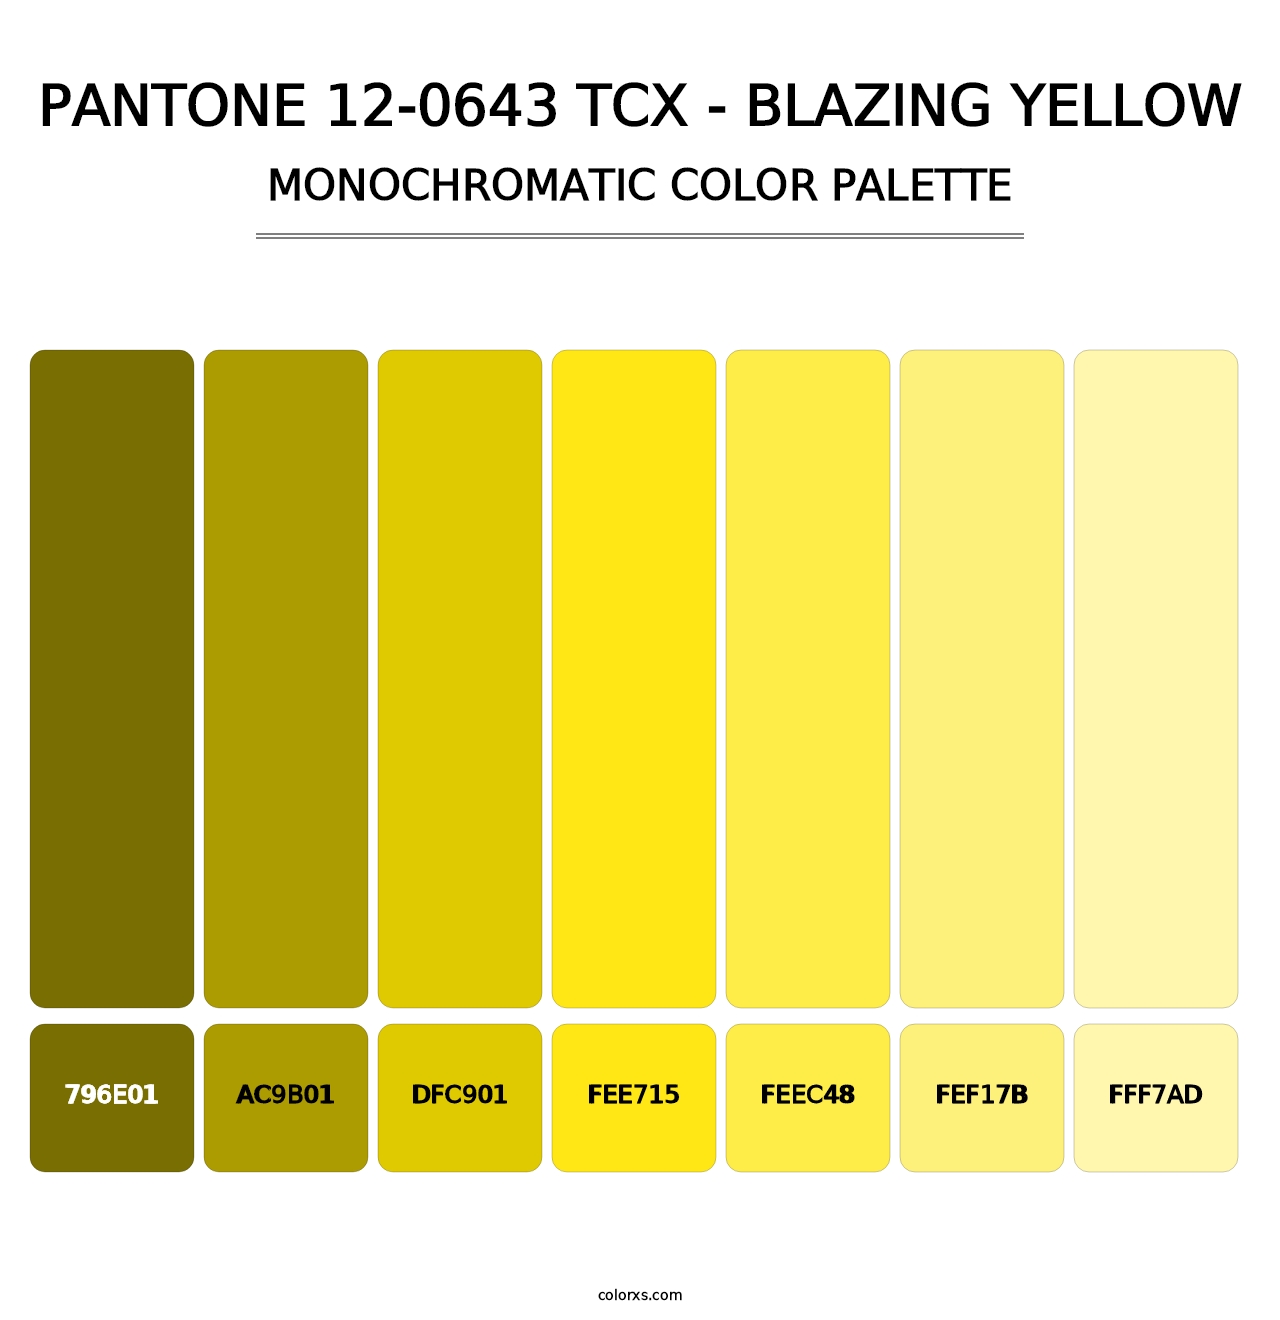 PANTONE 12-0643 TCX - Blazing Yellow - Monochromatic Color Palette